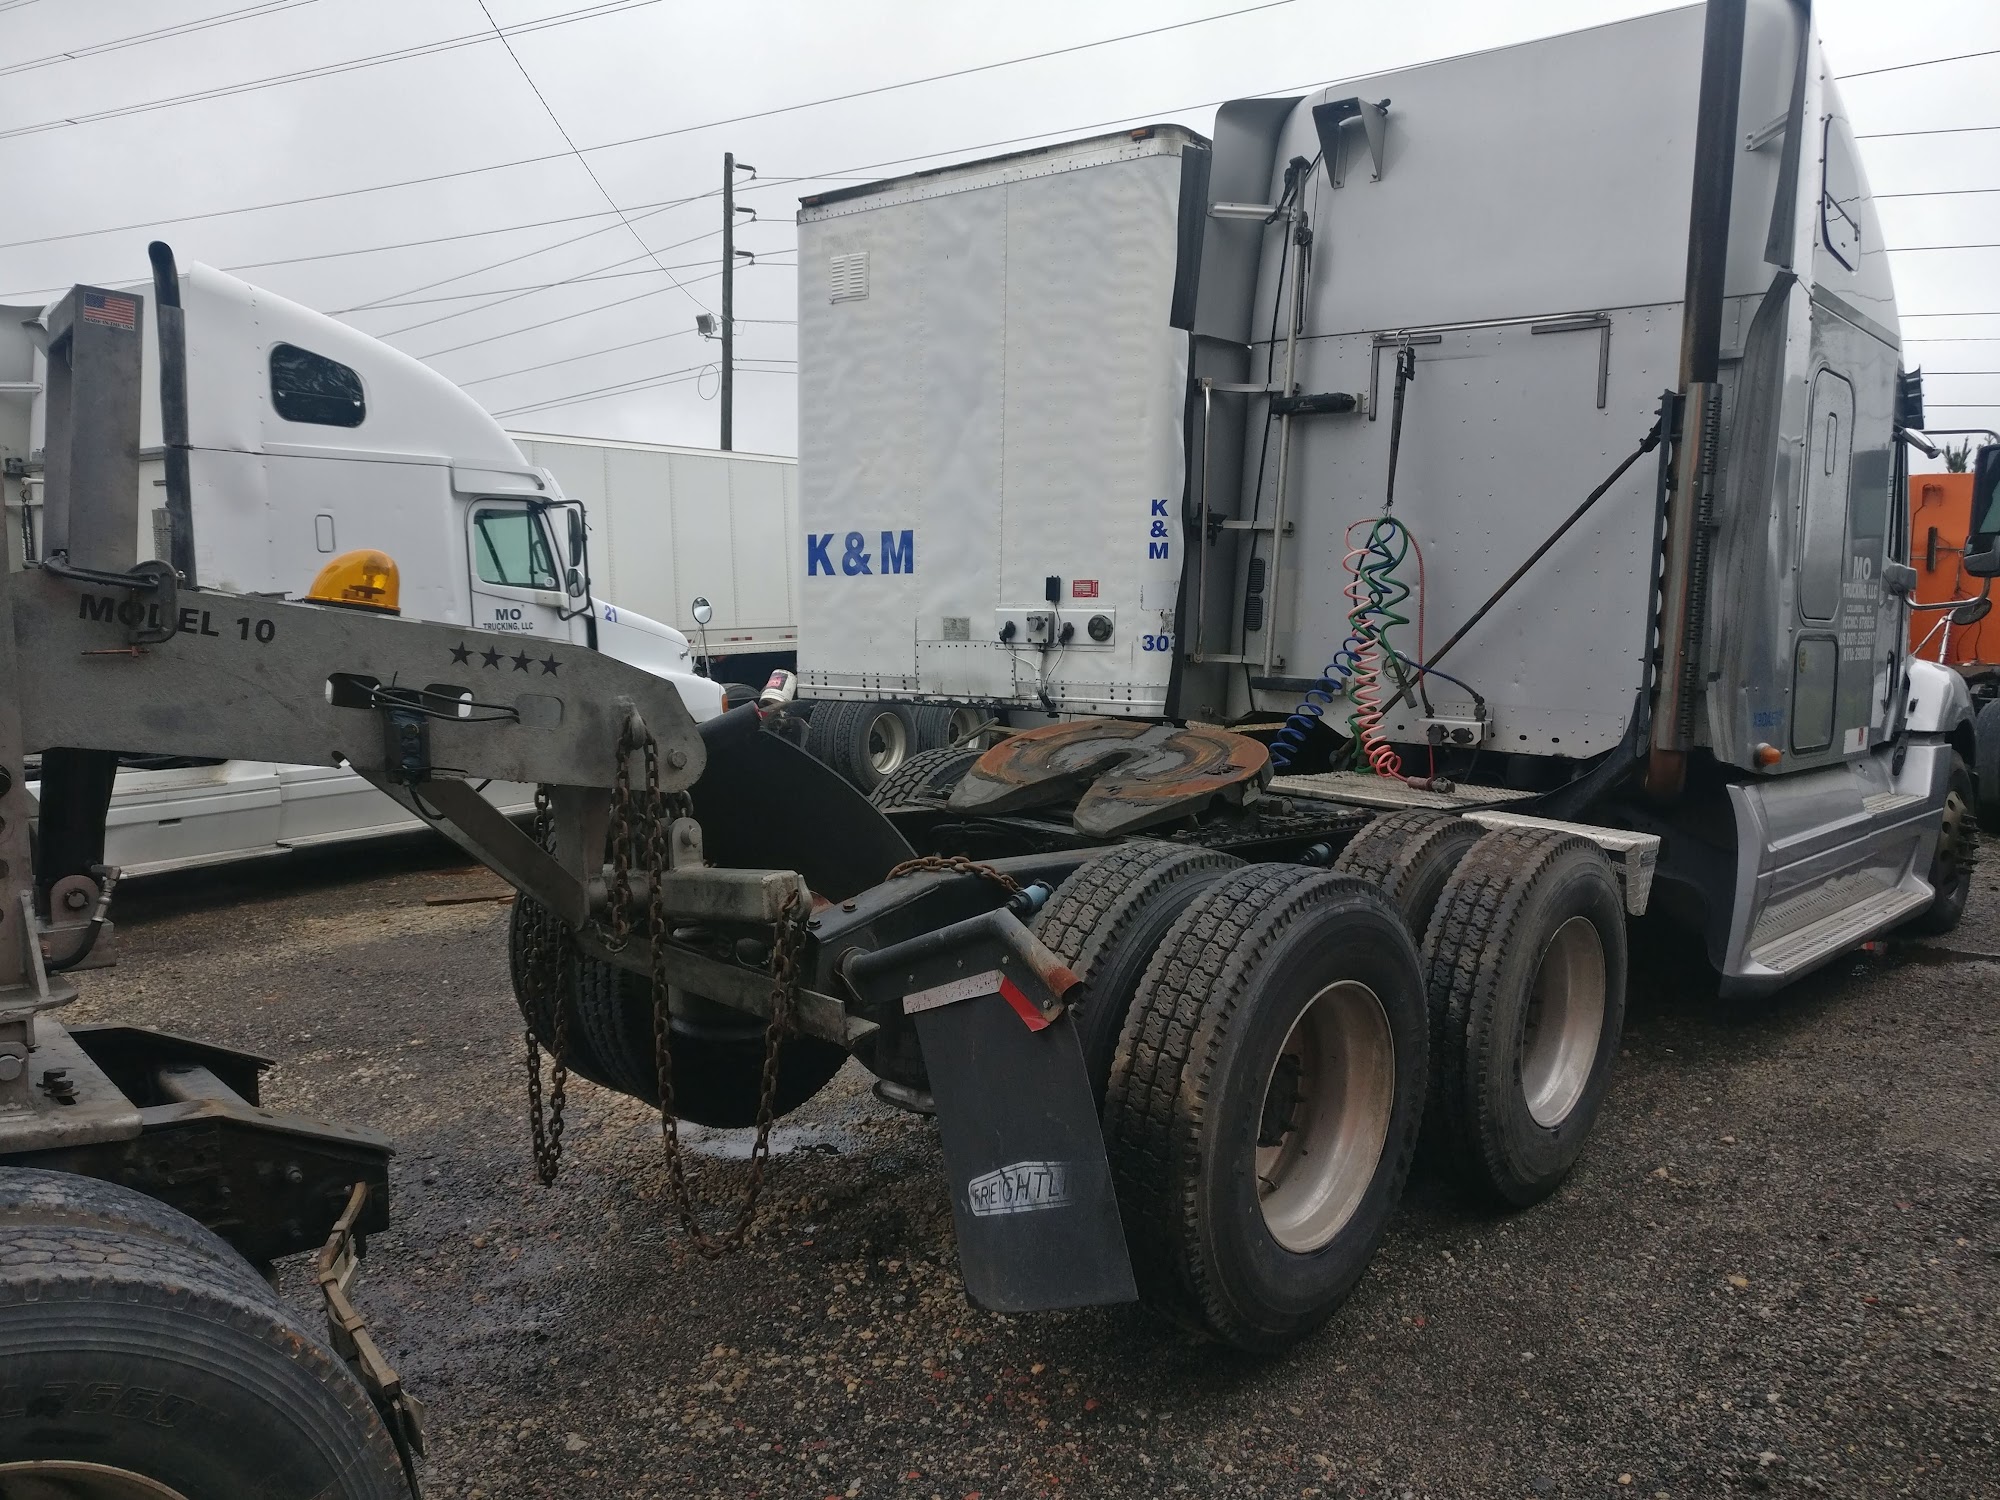 K&M Truck Trailer Repair 1278 State Rd S-20-233, Ridgeway South Carolina 29130